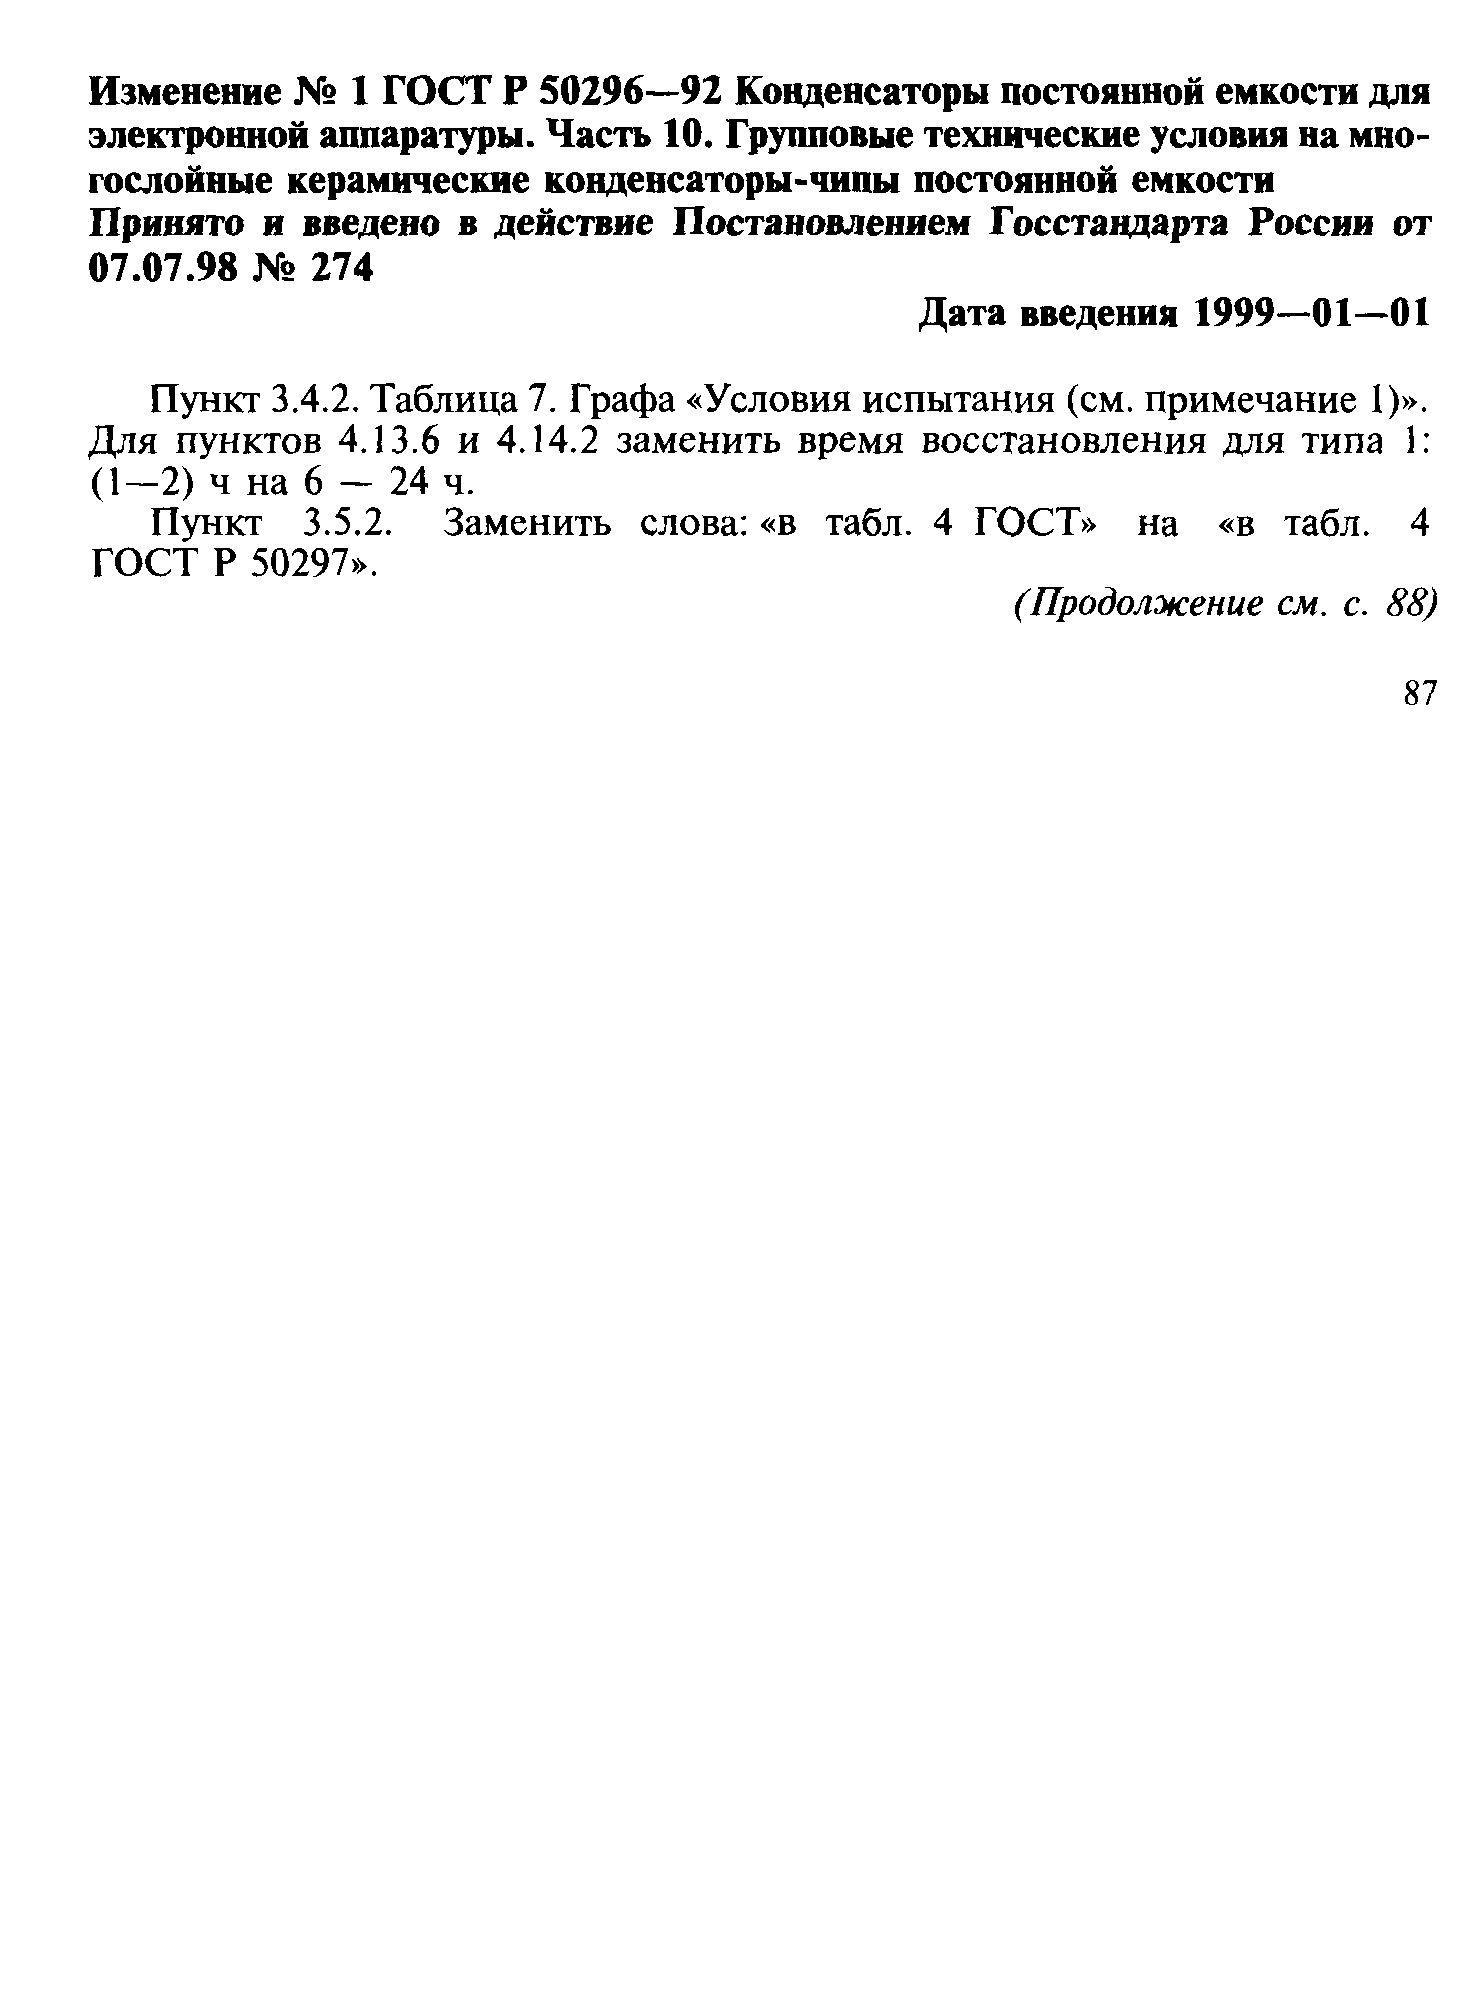 ГОСТ Р 50296-92